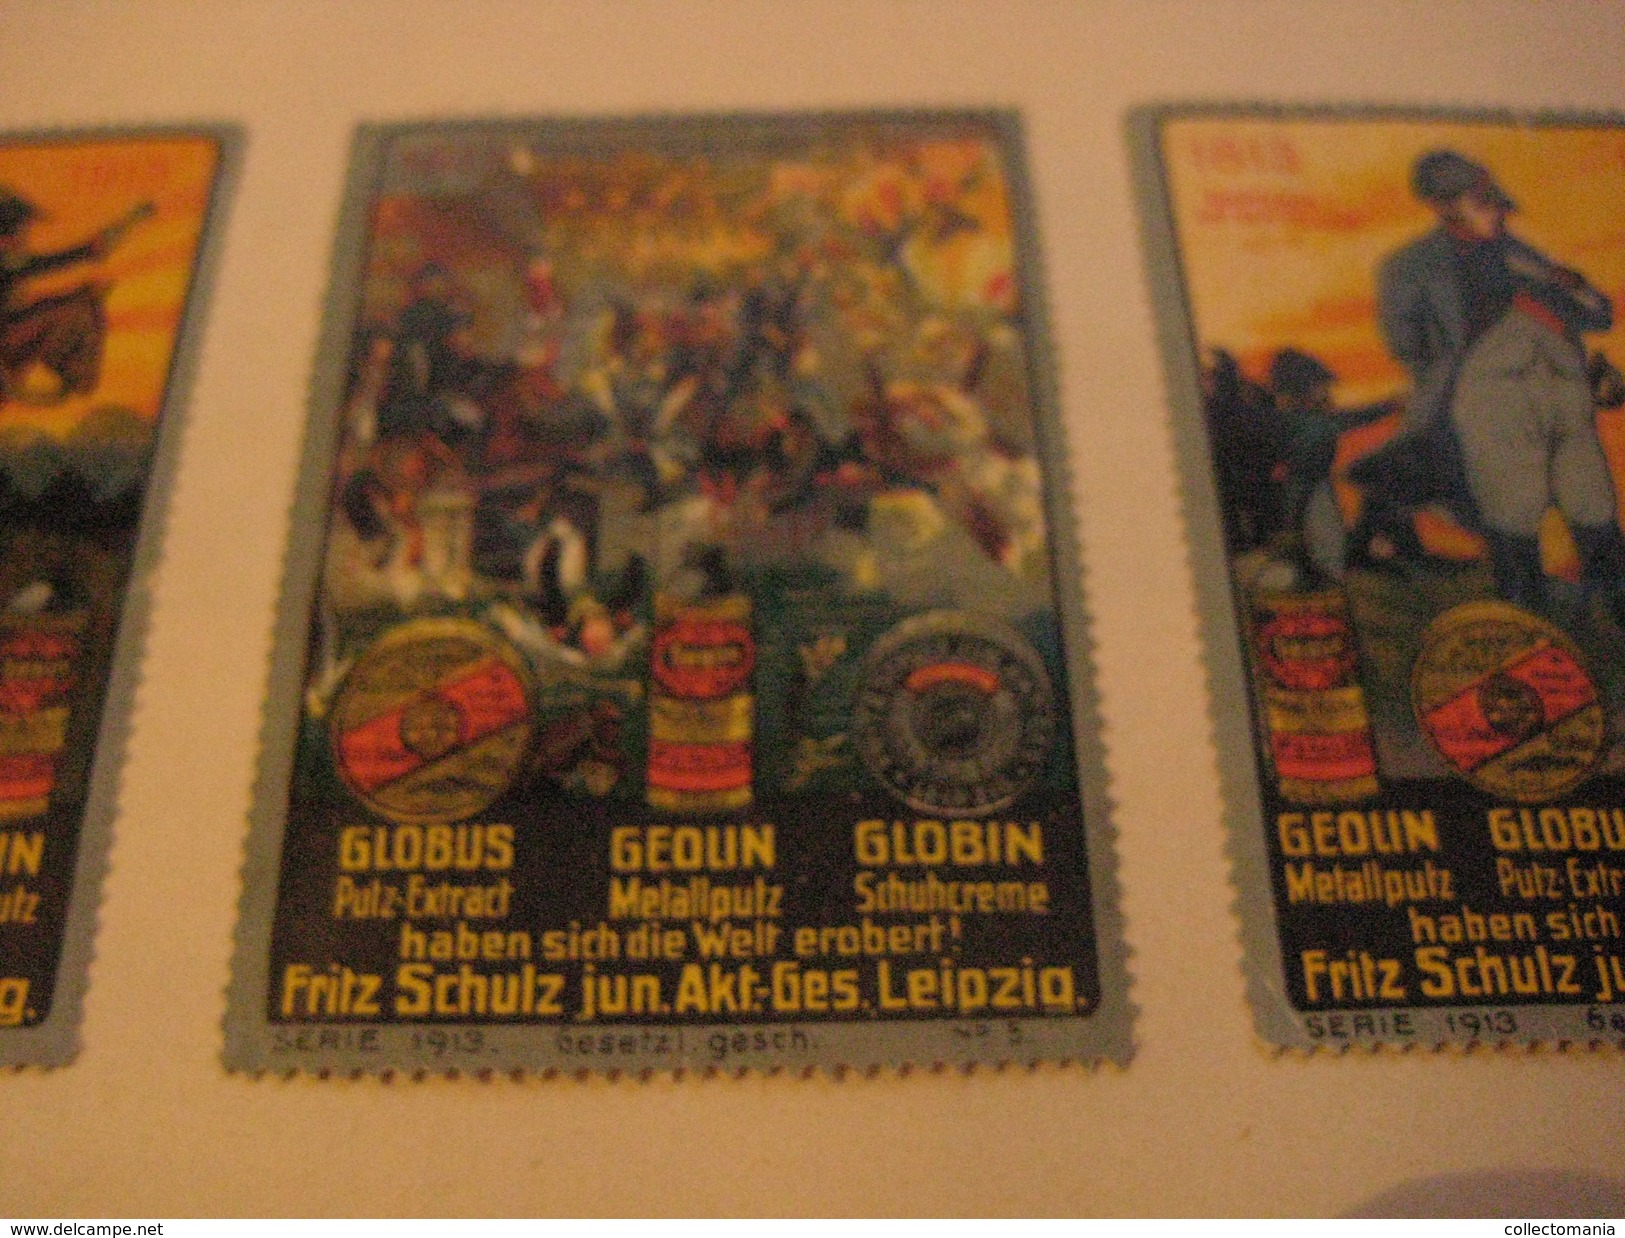 4 poster stamp advertising  litho ART NAPOLEON  Fritz Schutz Leipzich  GLOBUS GEOLIN GLOBIN Metall putz